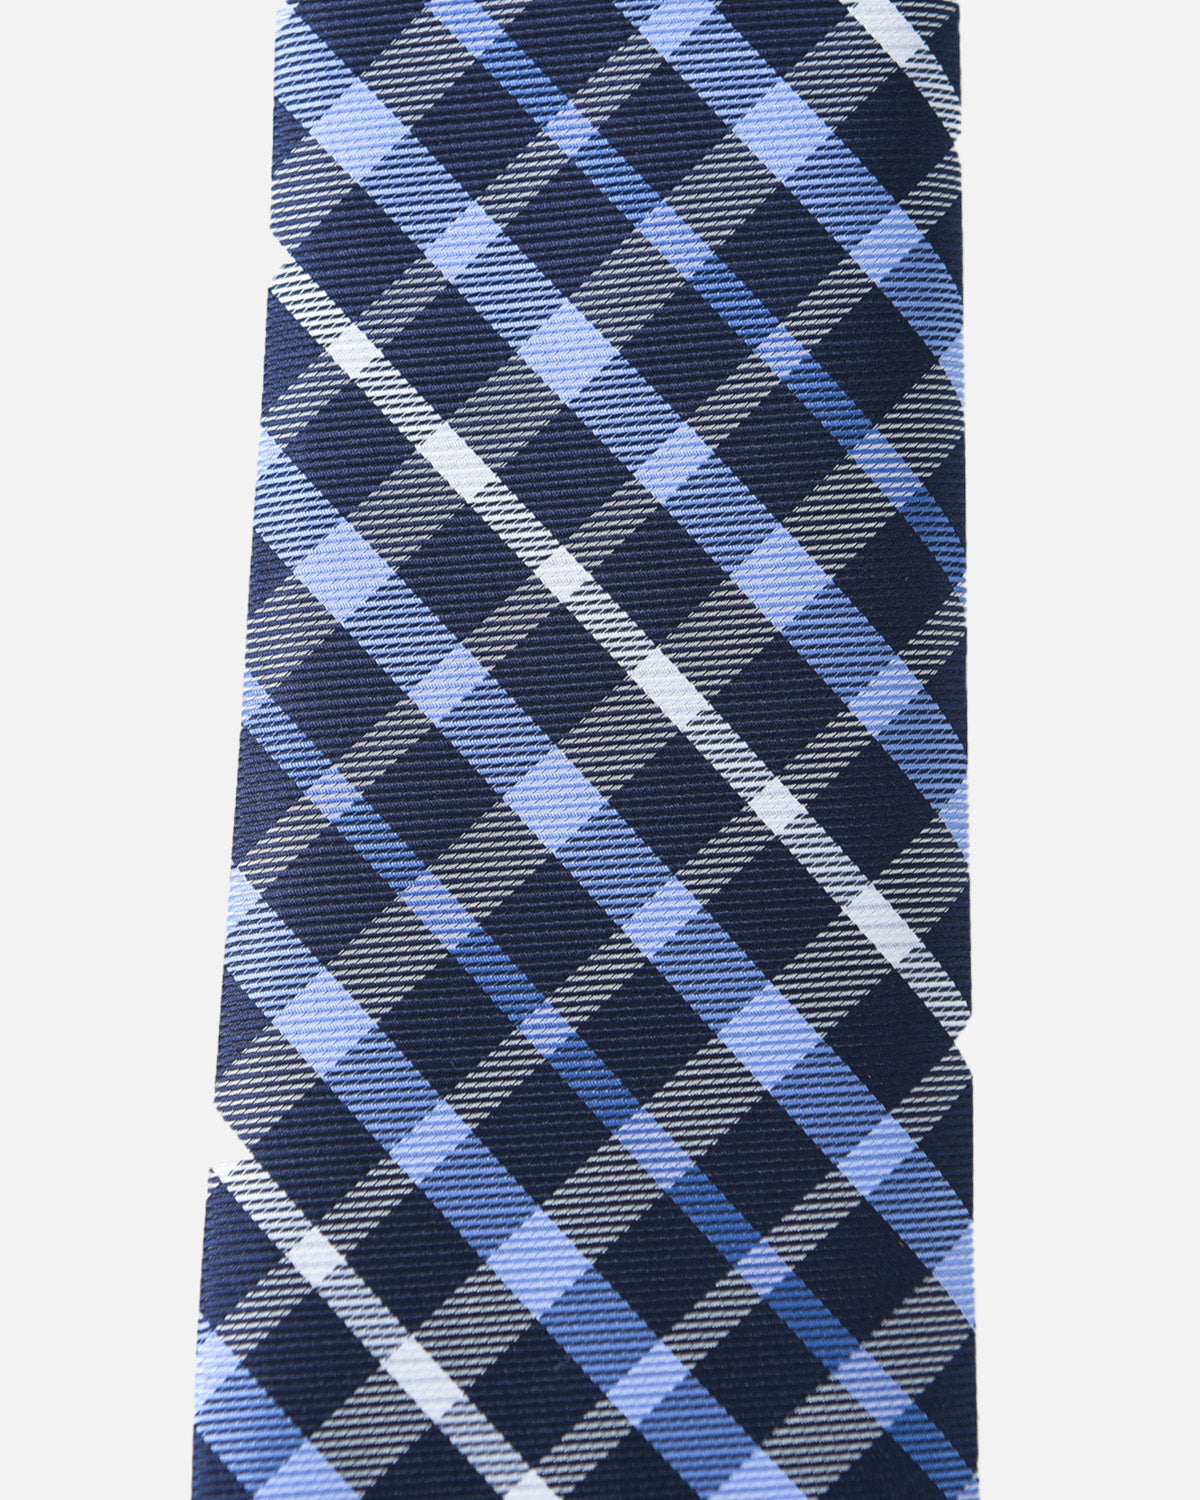 Immortal Powder Blue &amp; Navy Stripe Tie